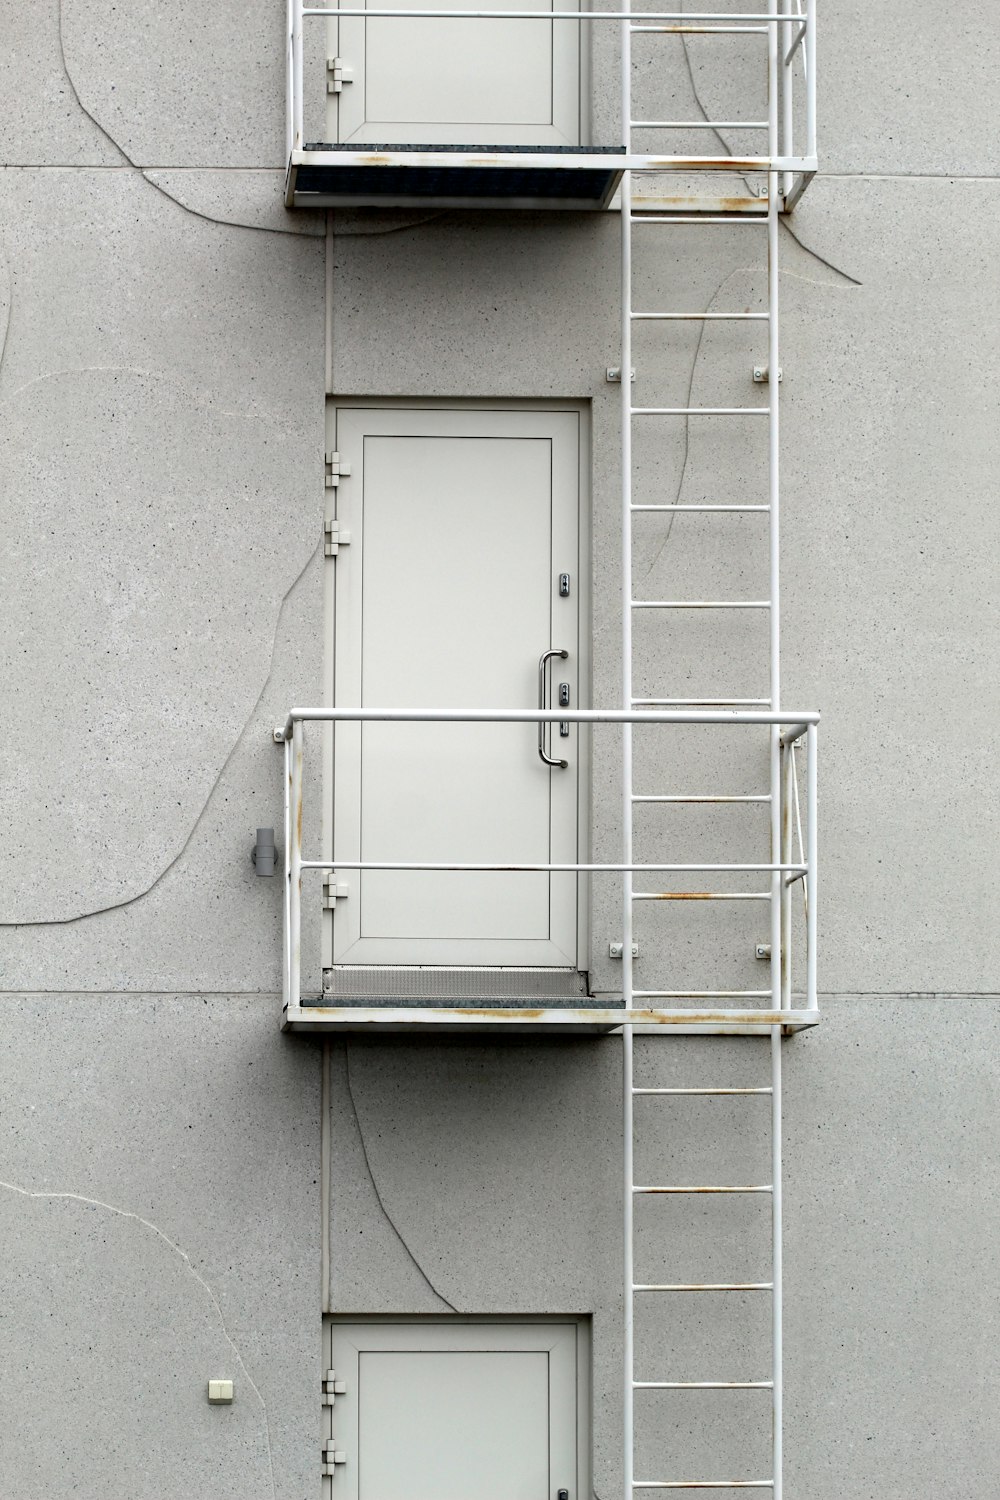 moldura da janela de metal branco na parede de concreto cinza